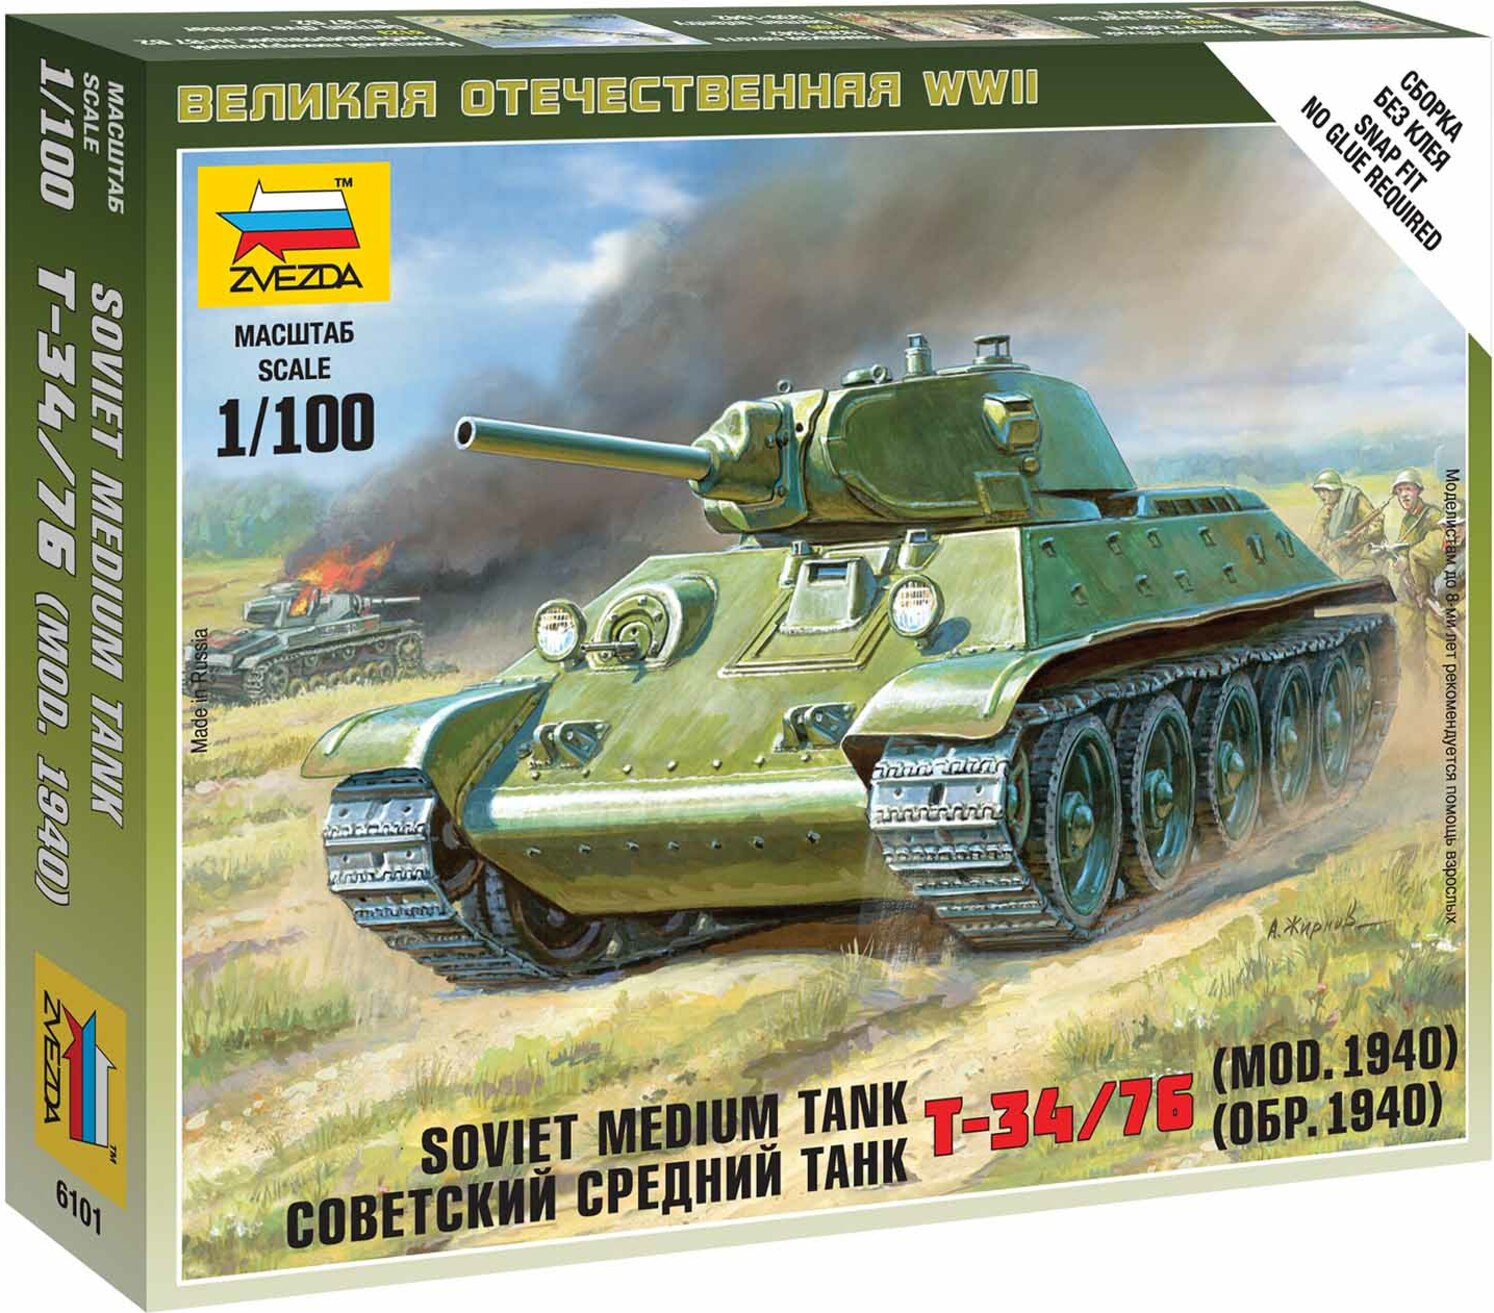 Wargames (WWII) tank 6101 - Soviet Medium Tank T-34/76 (1: 100)